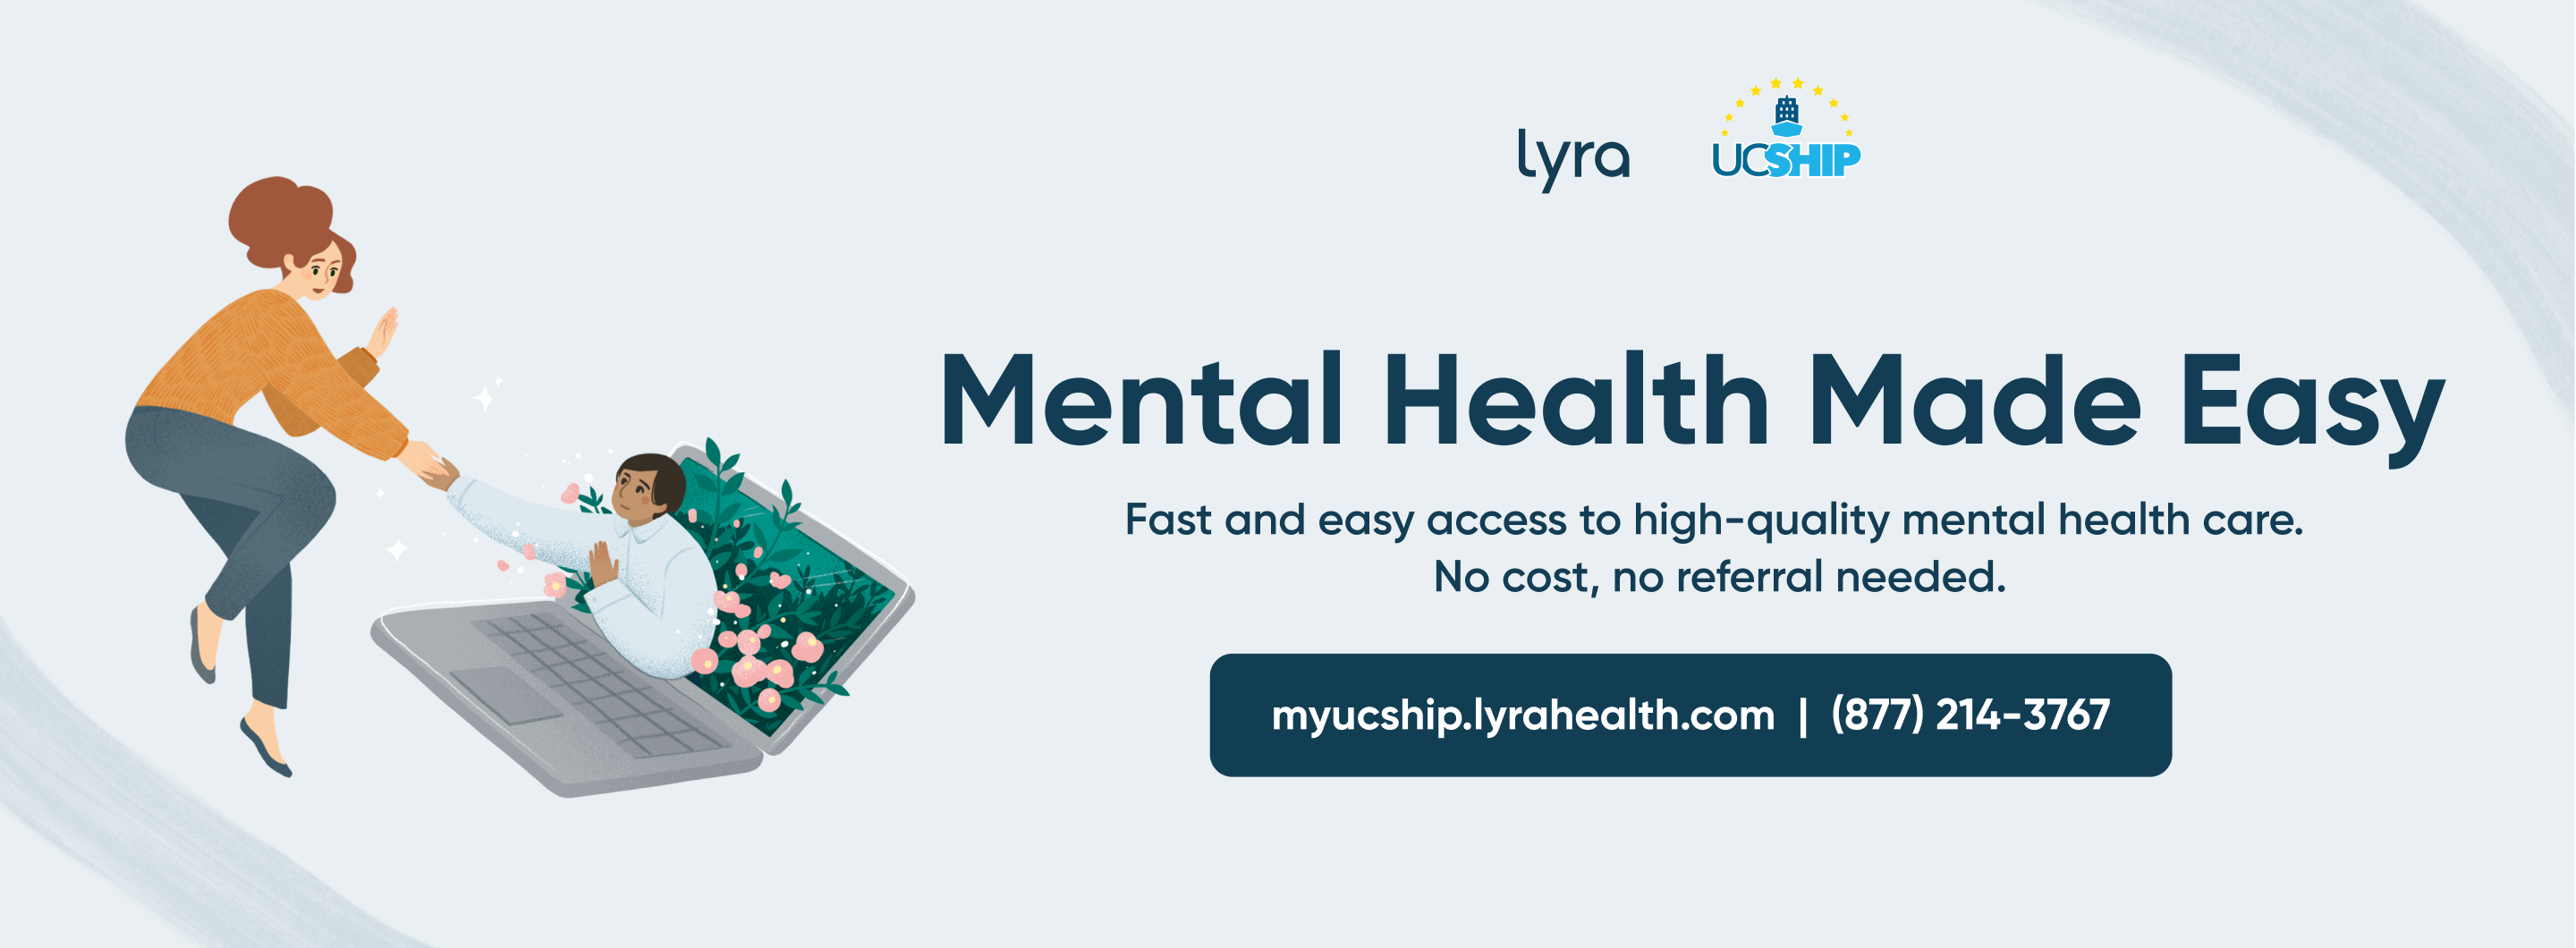 Lyra: mental health made easy banner